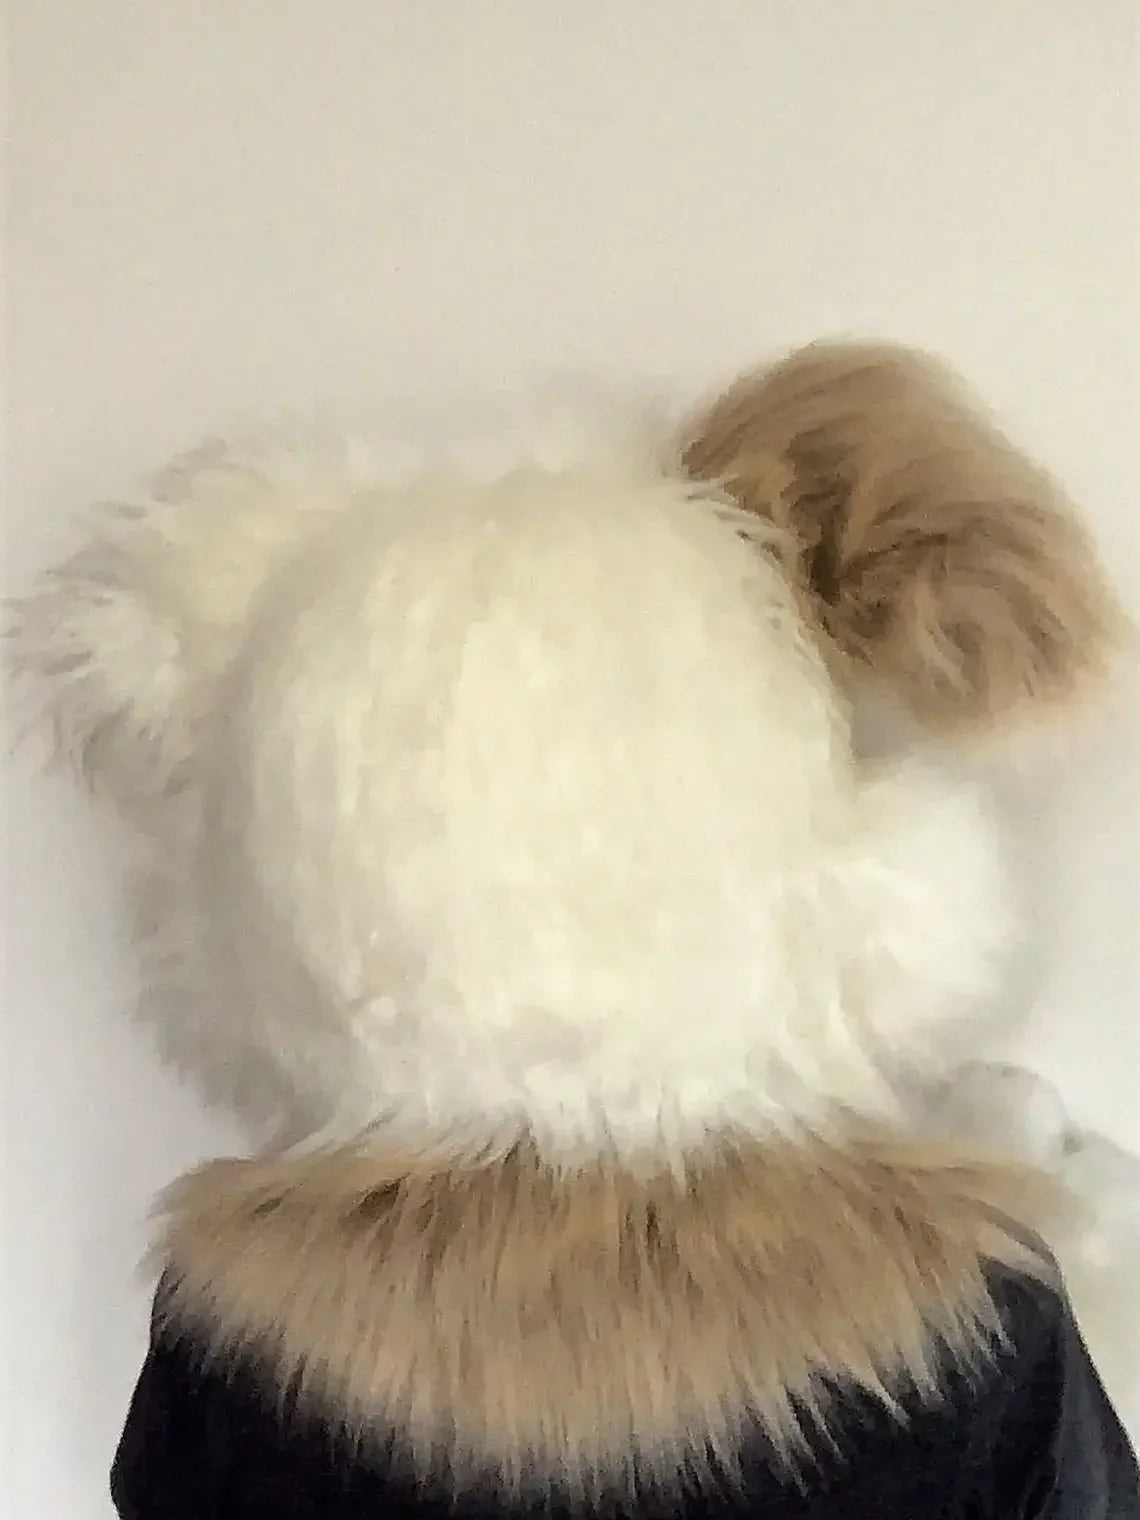 Cute Puppy Dog Partial Fursuit (Head & Paws)